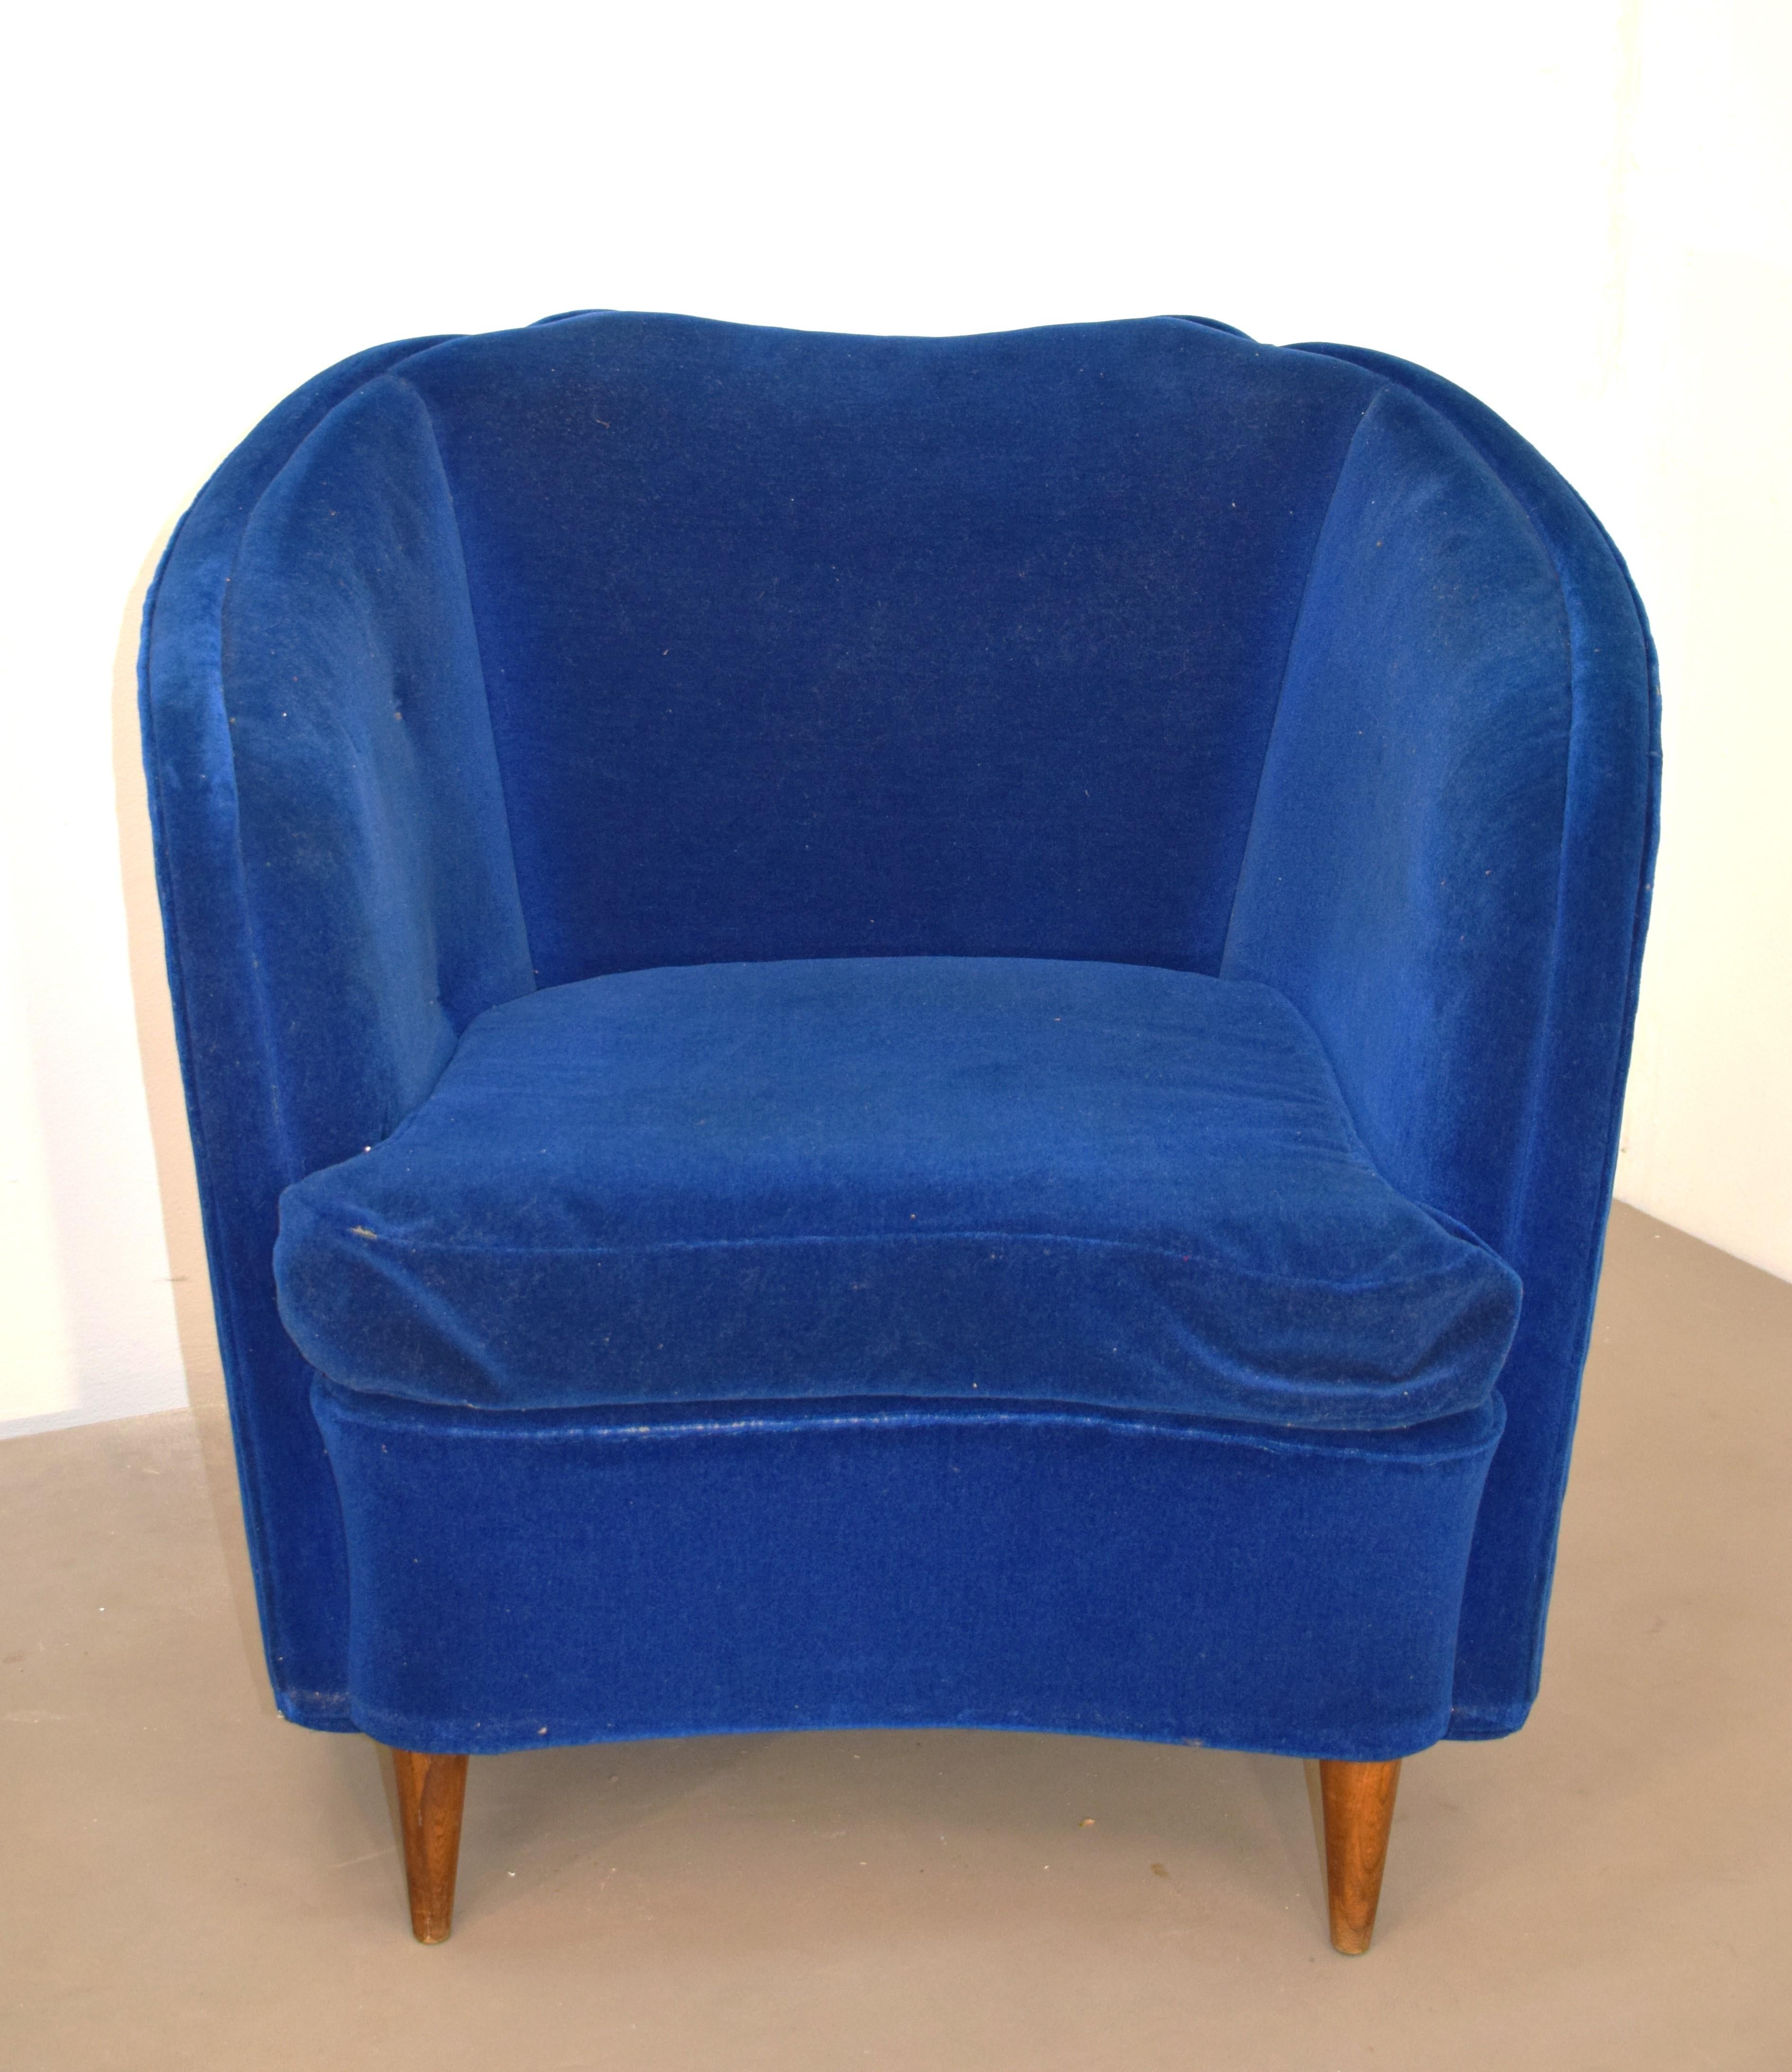 Pair of Italian armchairs, 1950s.
Dimensions: H=76 cm; W= 82 cm; D= 80 cm; H seat= 44 cm.